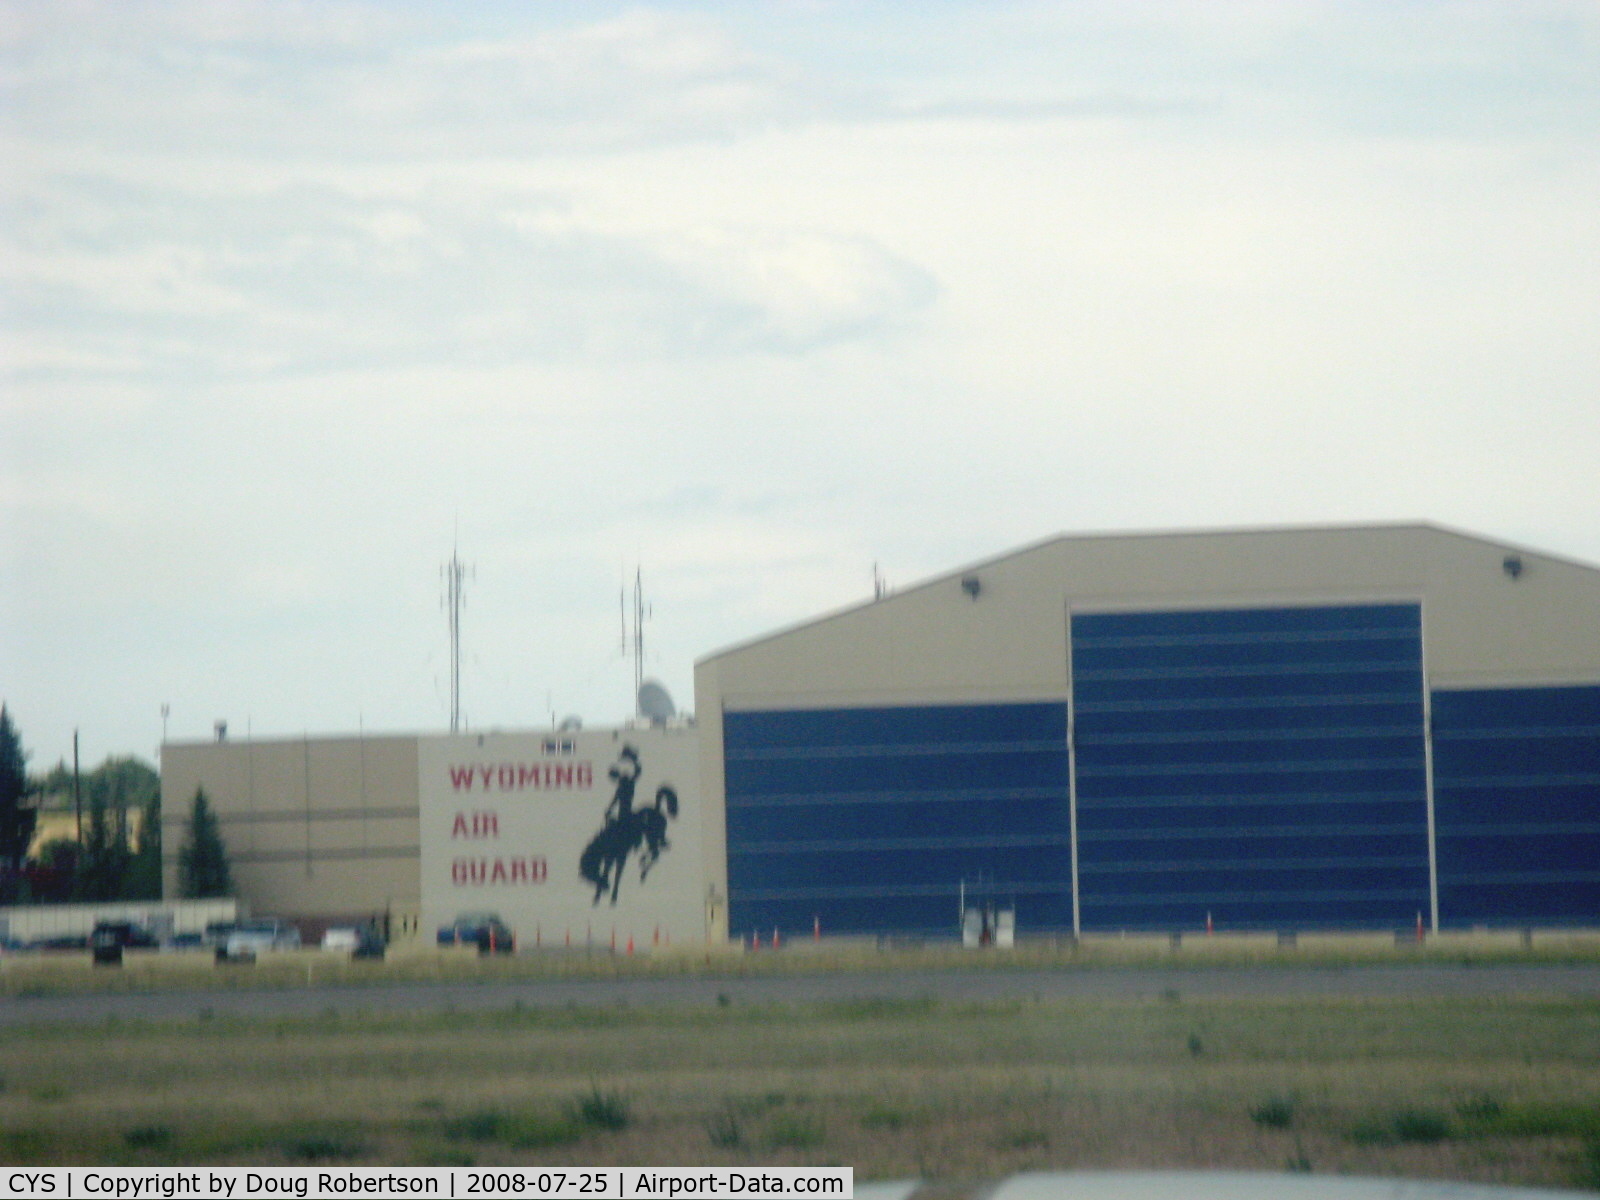 Cheyenne Rgnl/jerry Olson Field Airport (CYS) - Wyoming Air Guard hangar